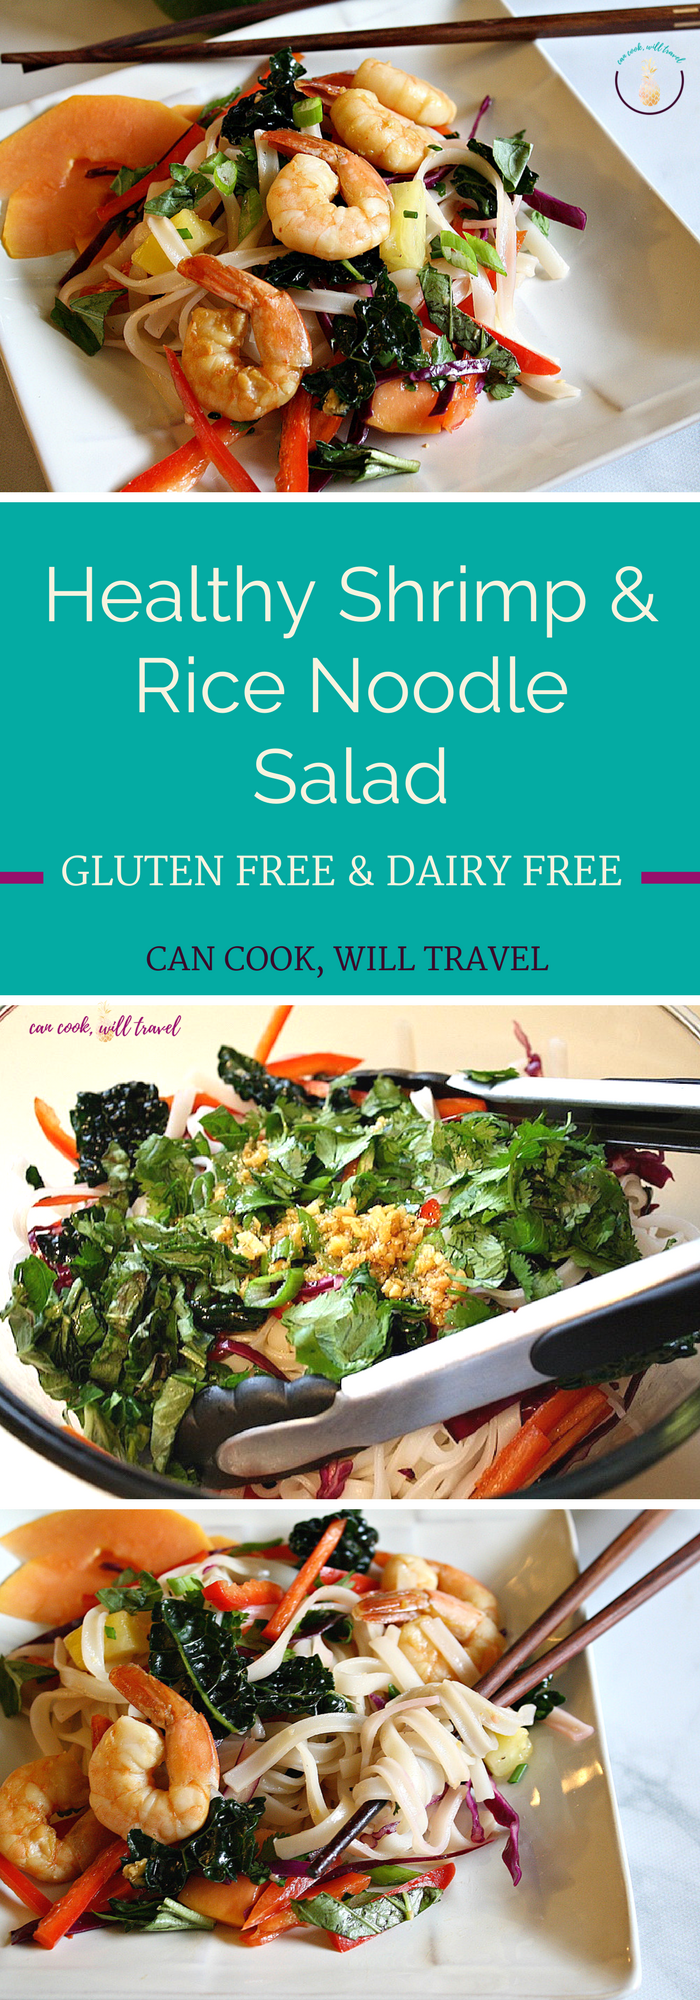 Healthy Shrimp & Rice Noodle Salad_Collage2